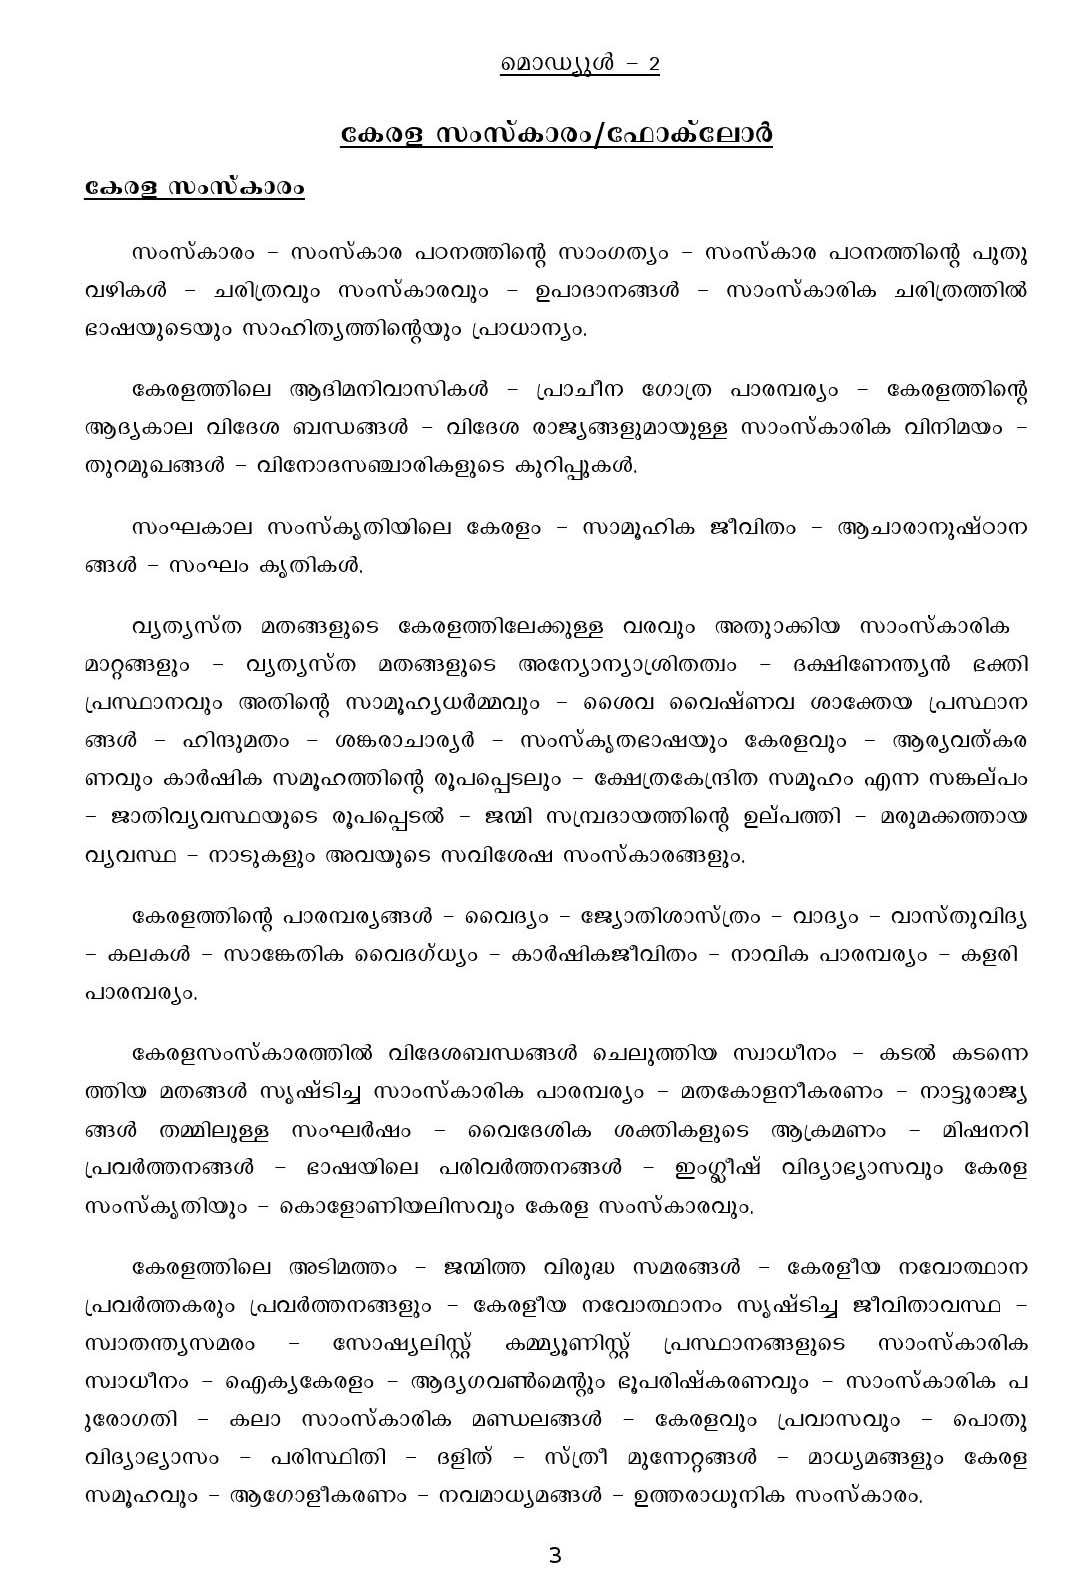 Kerala PSC Assistant Professor Malayalam Exam Syllabus - Notification Image 3